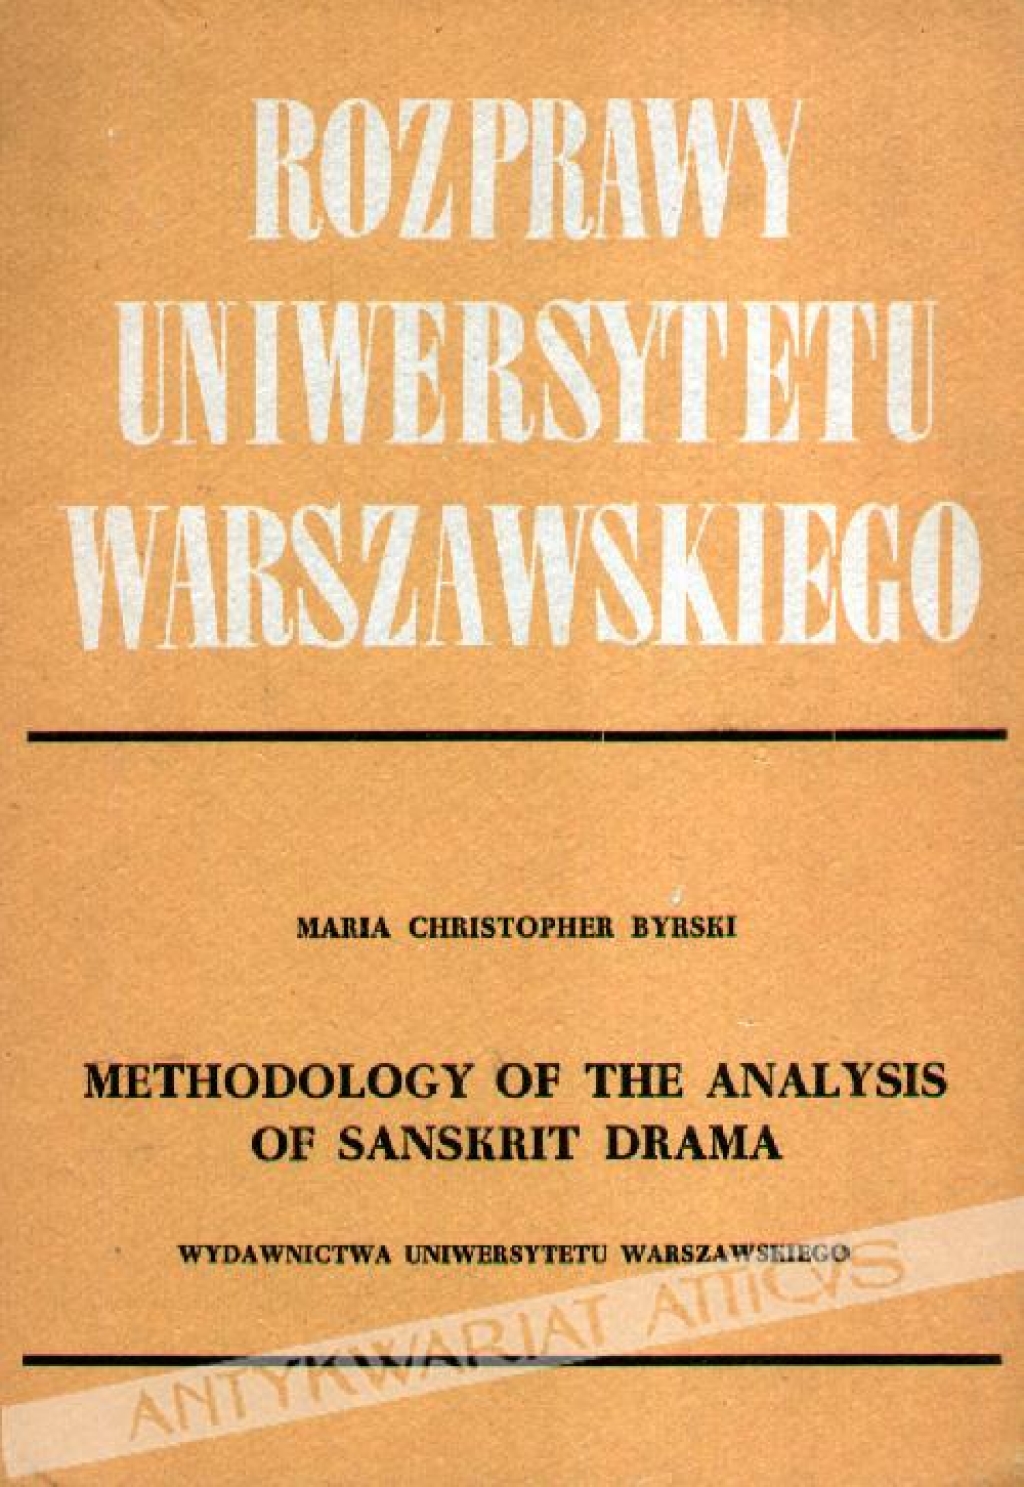 Methodology of the Analysis of Sanskrit Drama